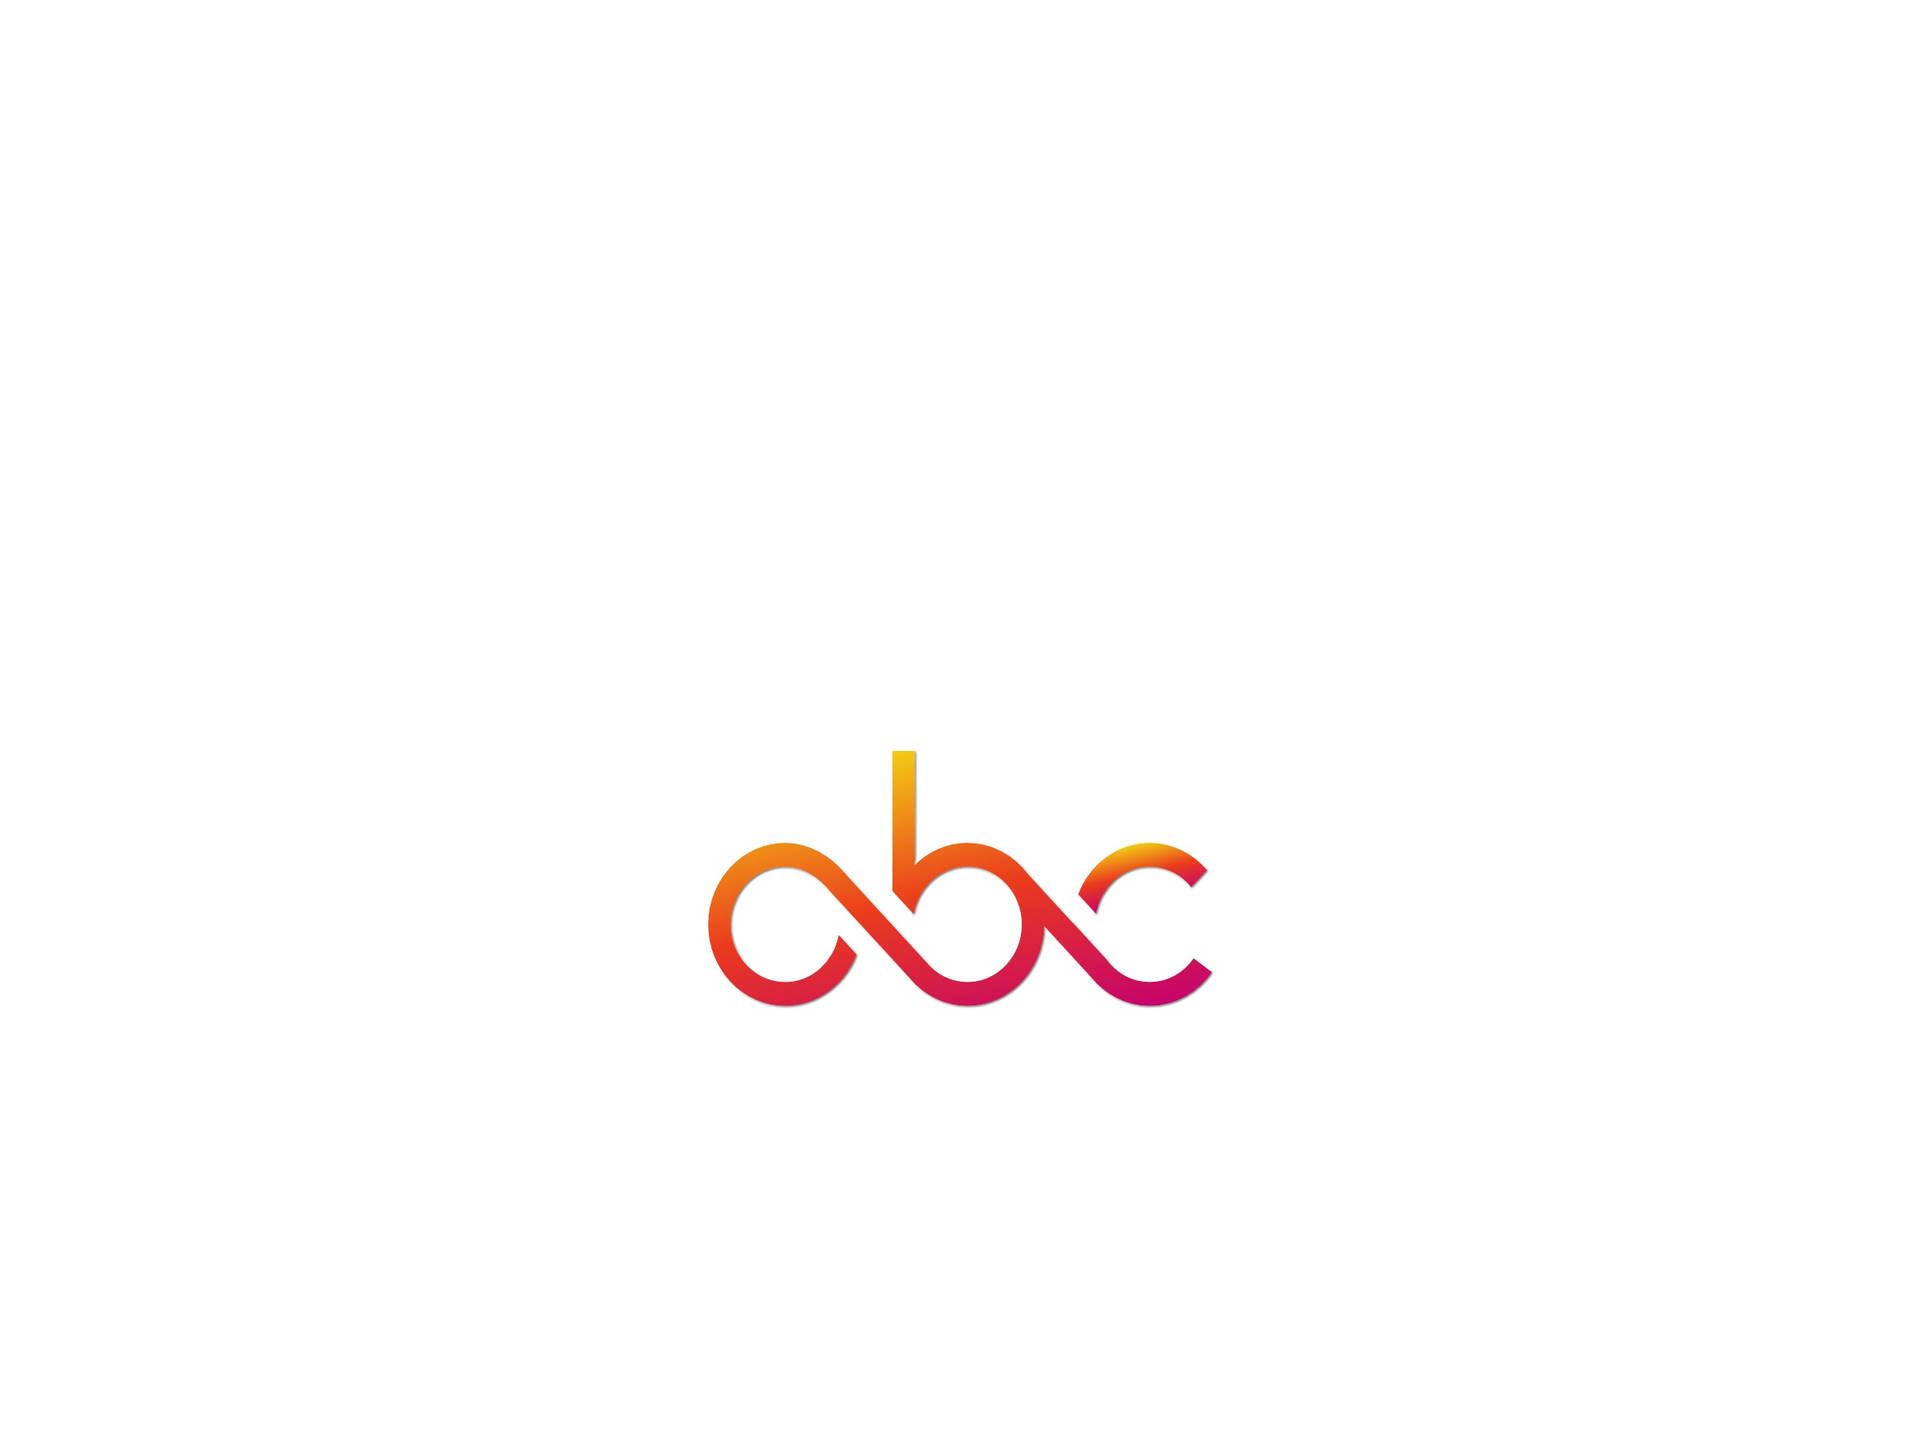 Abc Minimalist Stylised Letters Background